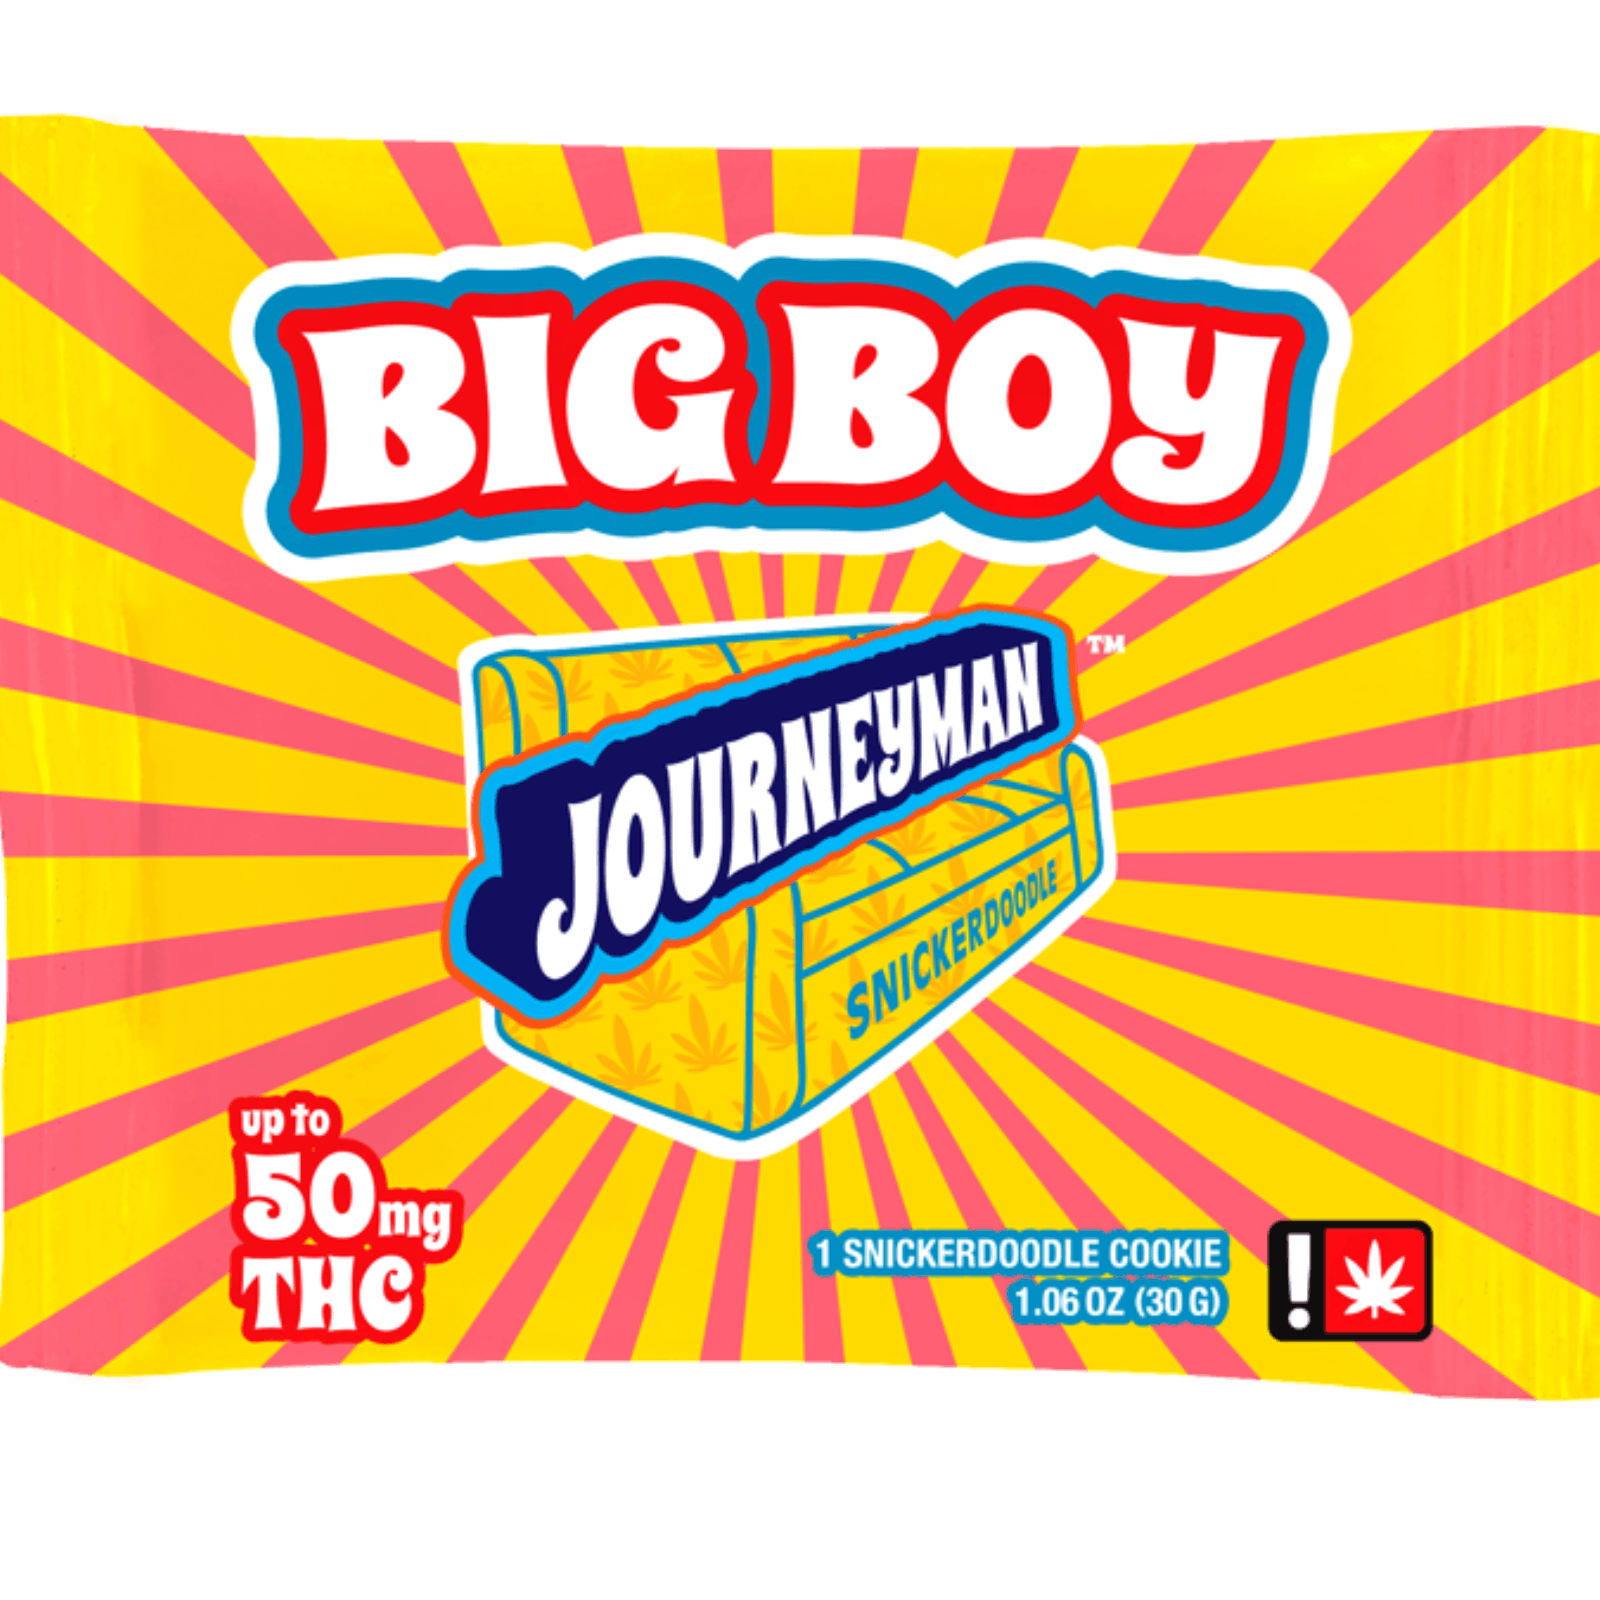 Journeyman: Big Boy Cookie